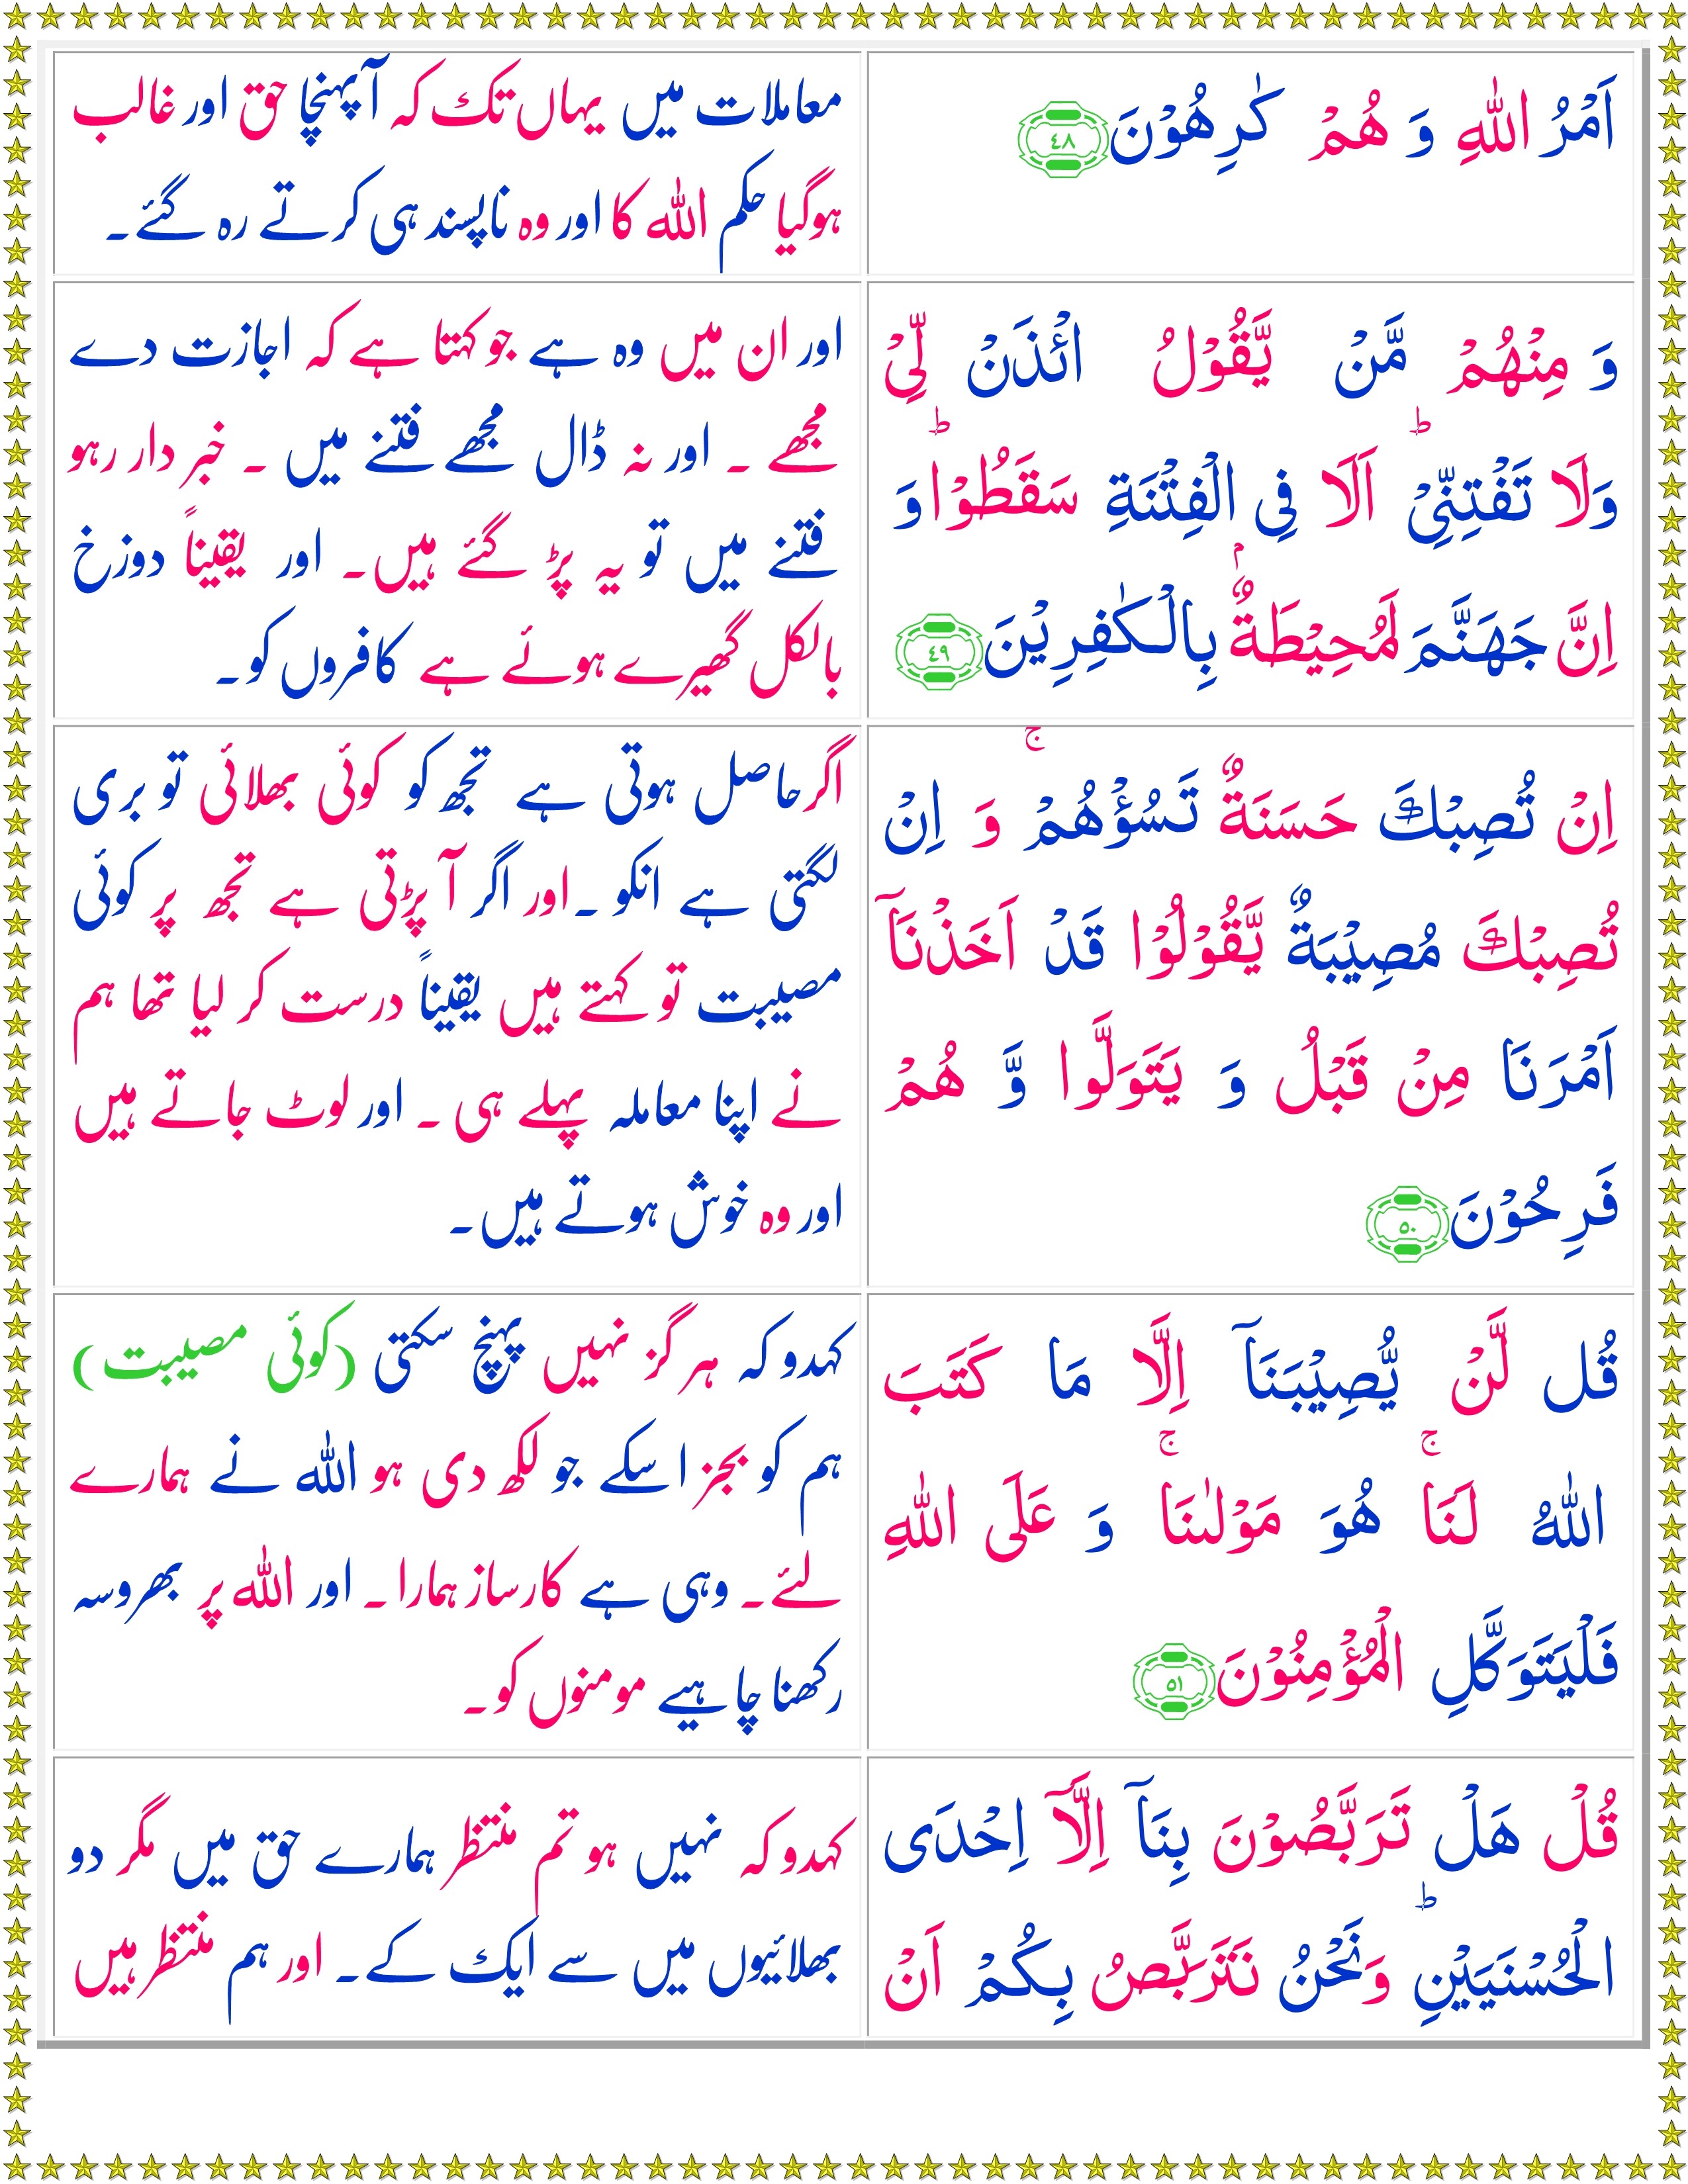 Surah At Taubah Urdu Page 2 Of 4 Quran O Sunnat